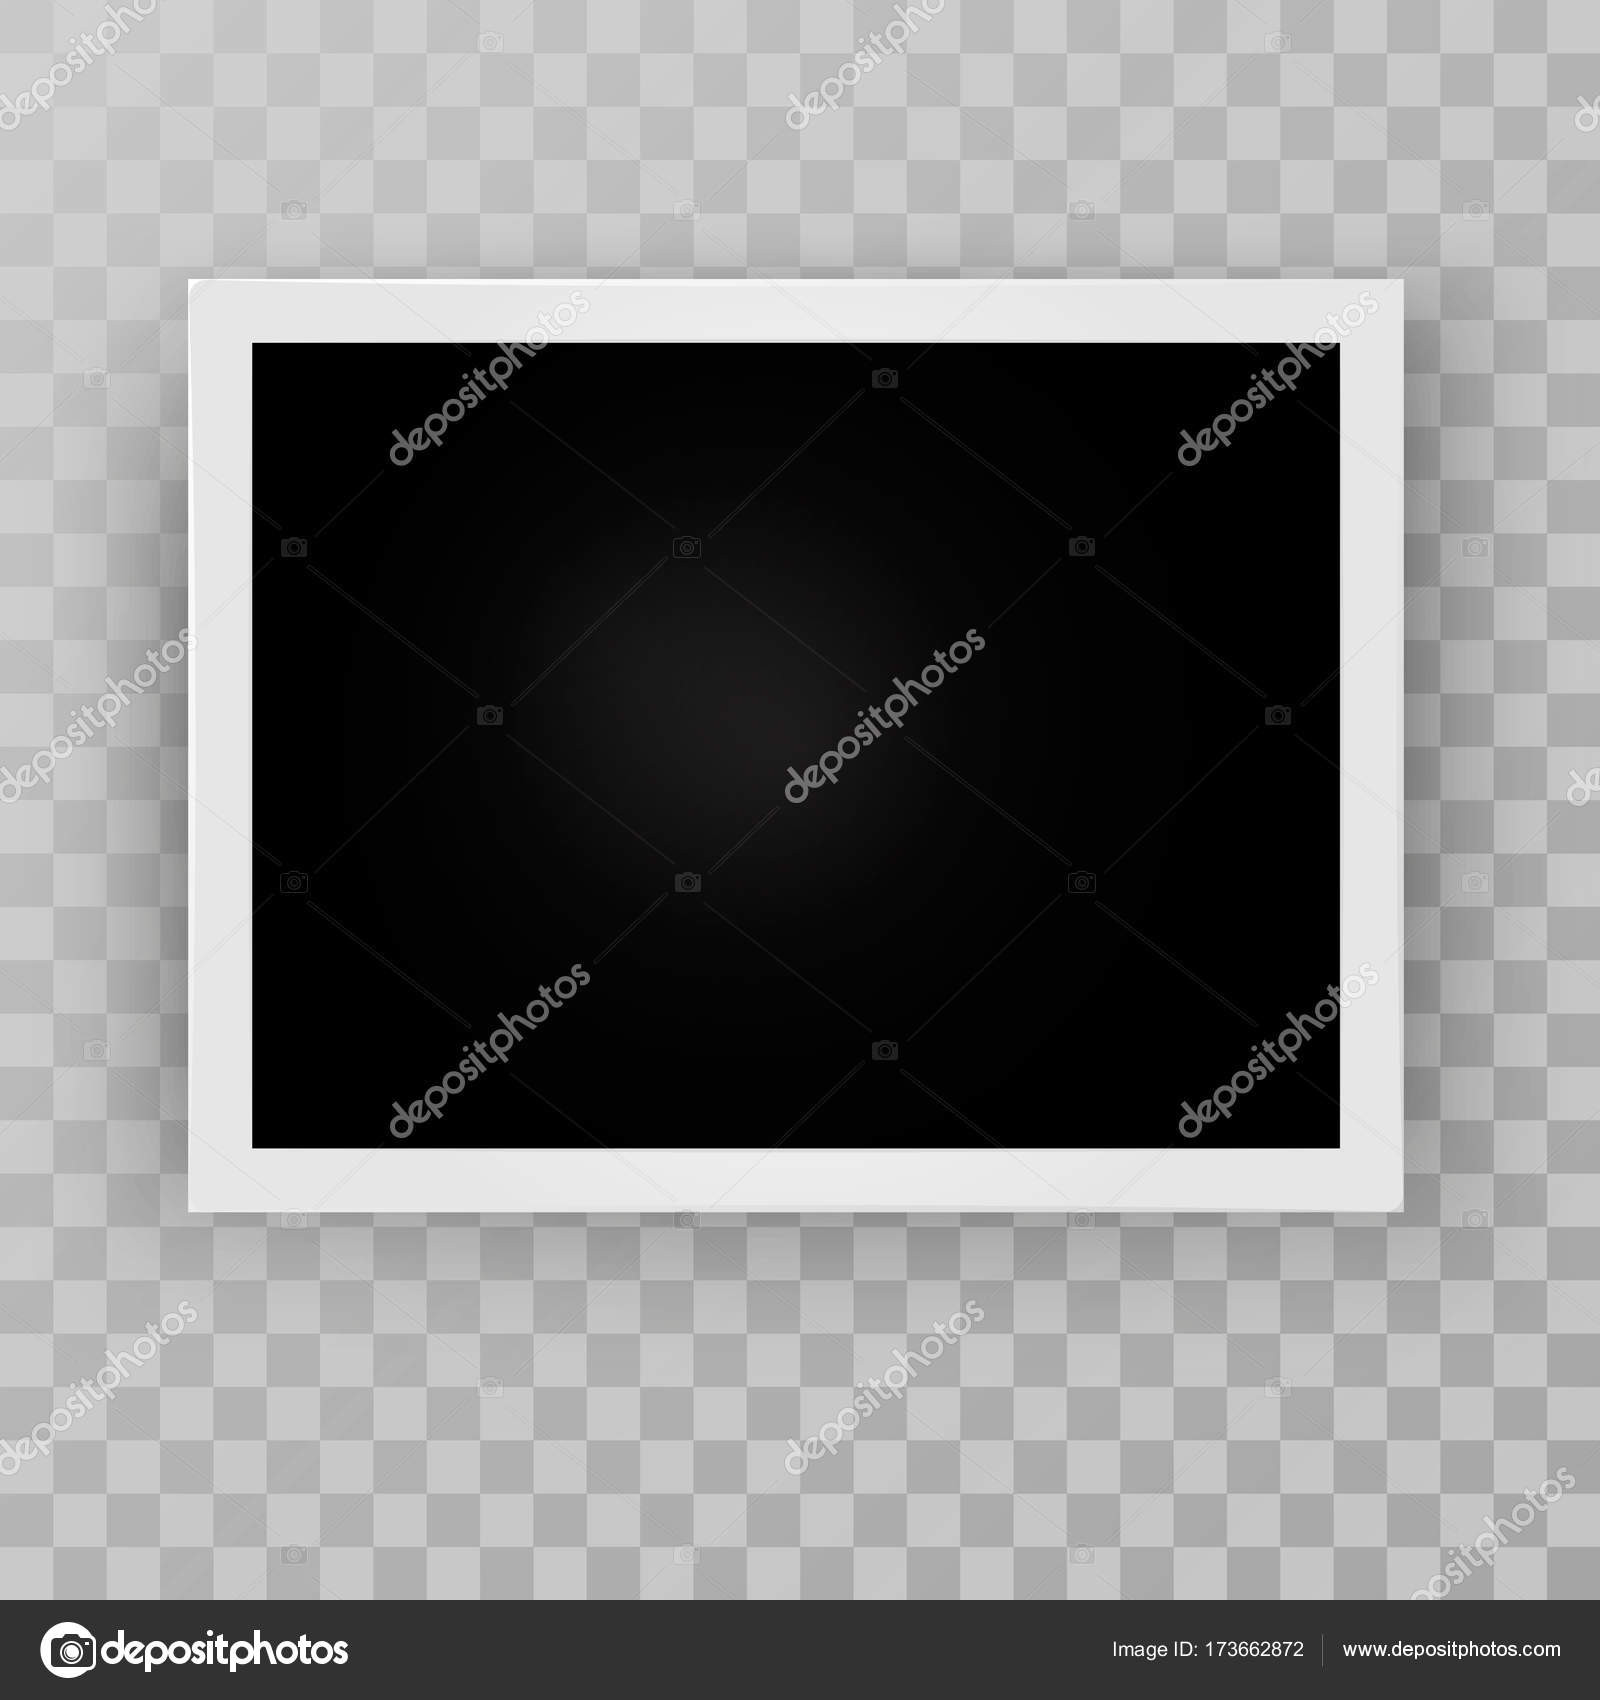 https://st3.depositphotos.com/7809818/17366/v/1600/depositphotos_173662872-stock-illustration-retro-realistic-horizontal-blank-instant.jpg